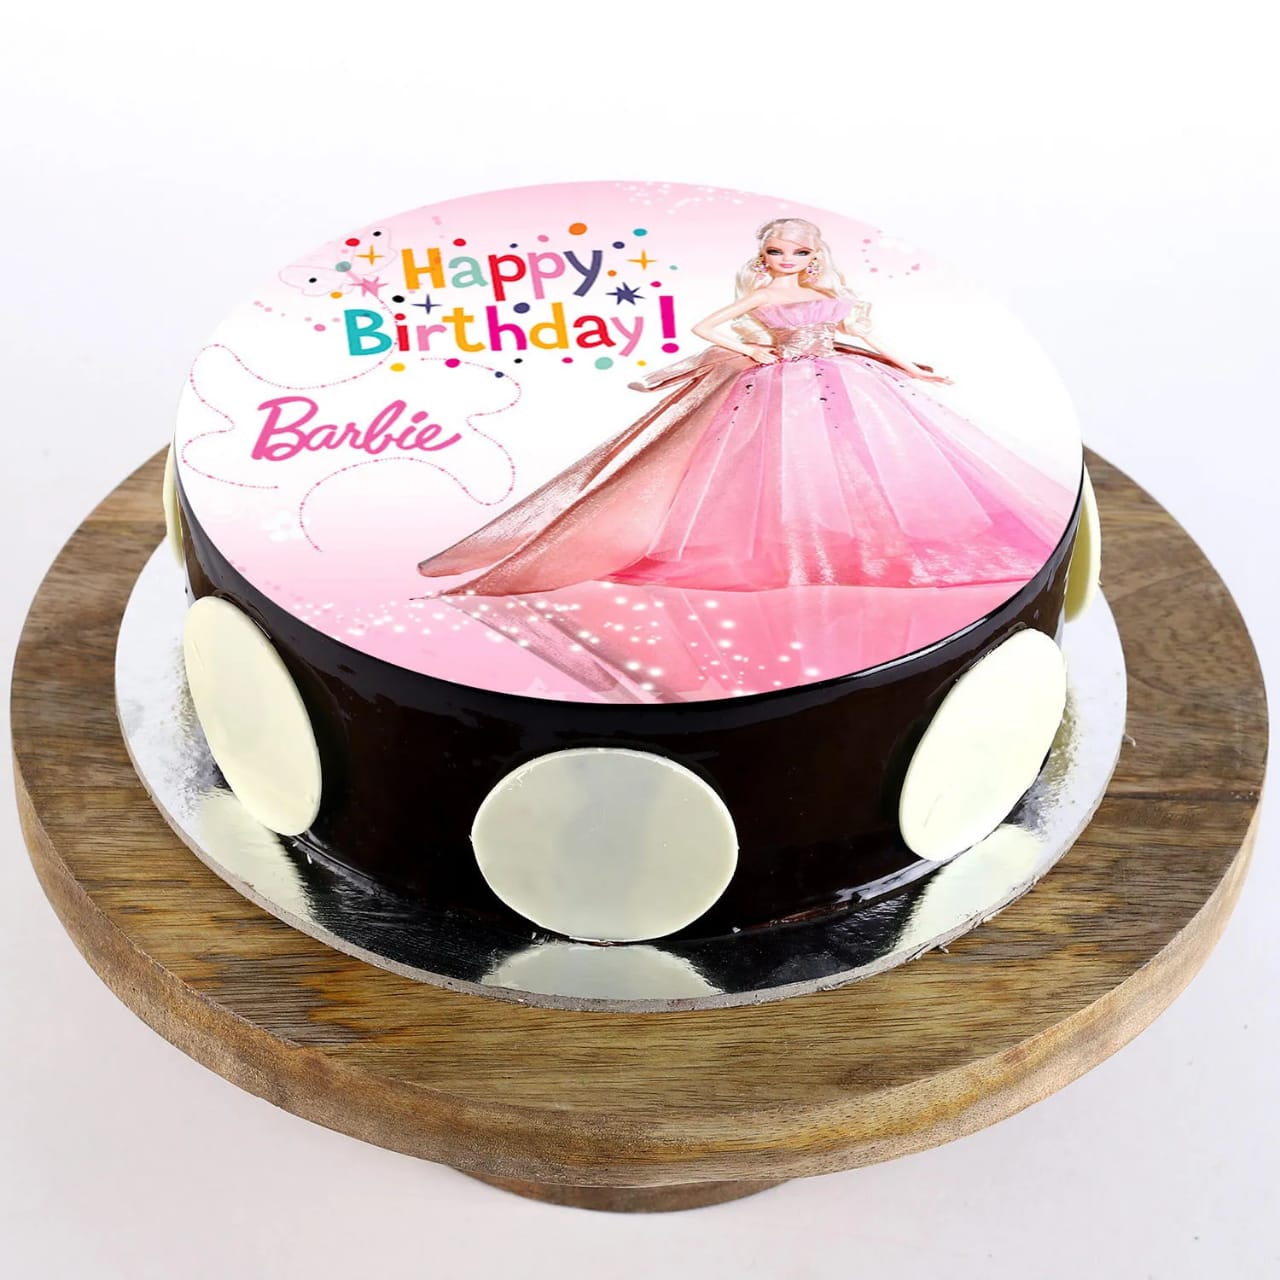 Barbie doll cake chocolate flever 1kg Rs1200/2kg 2400